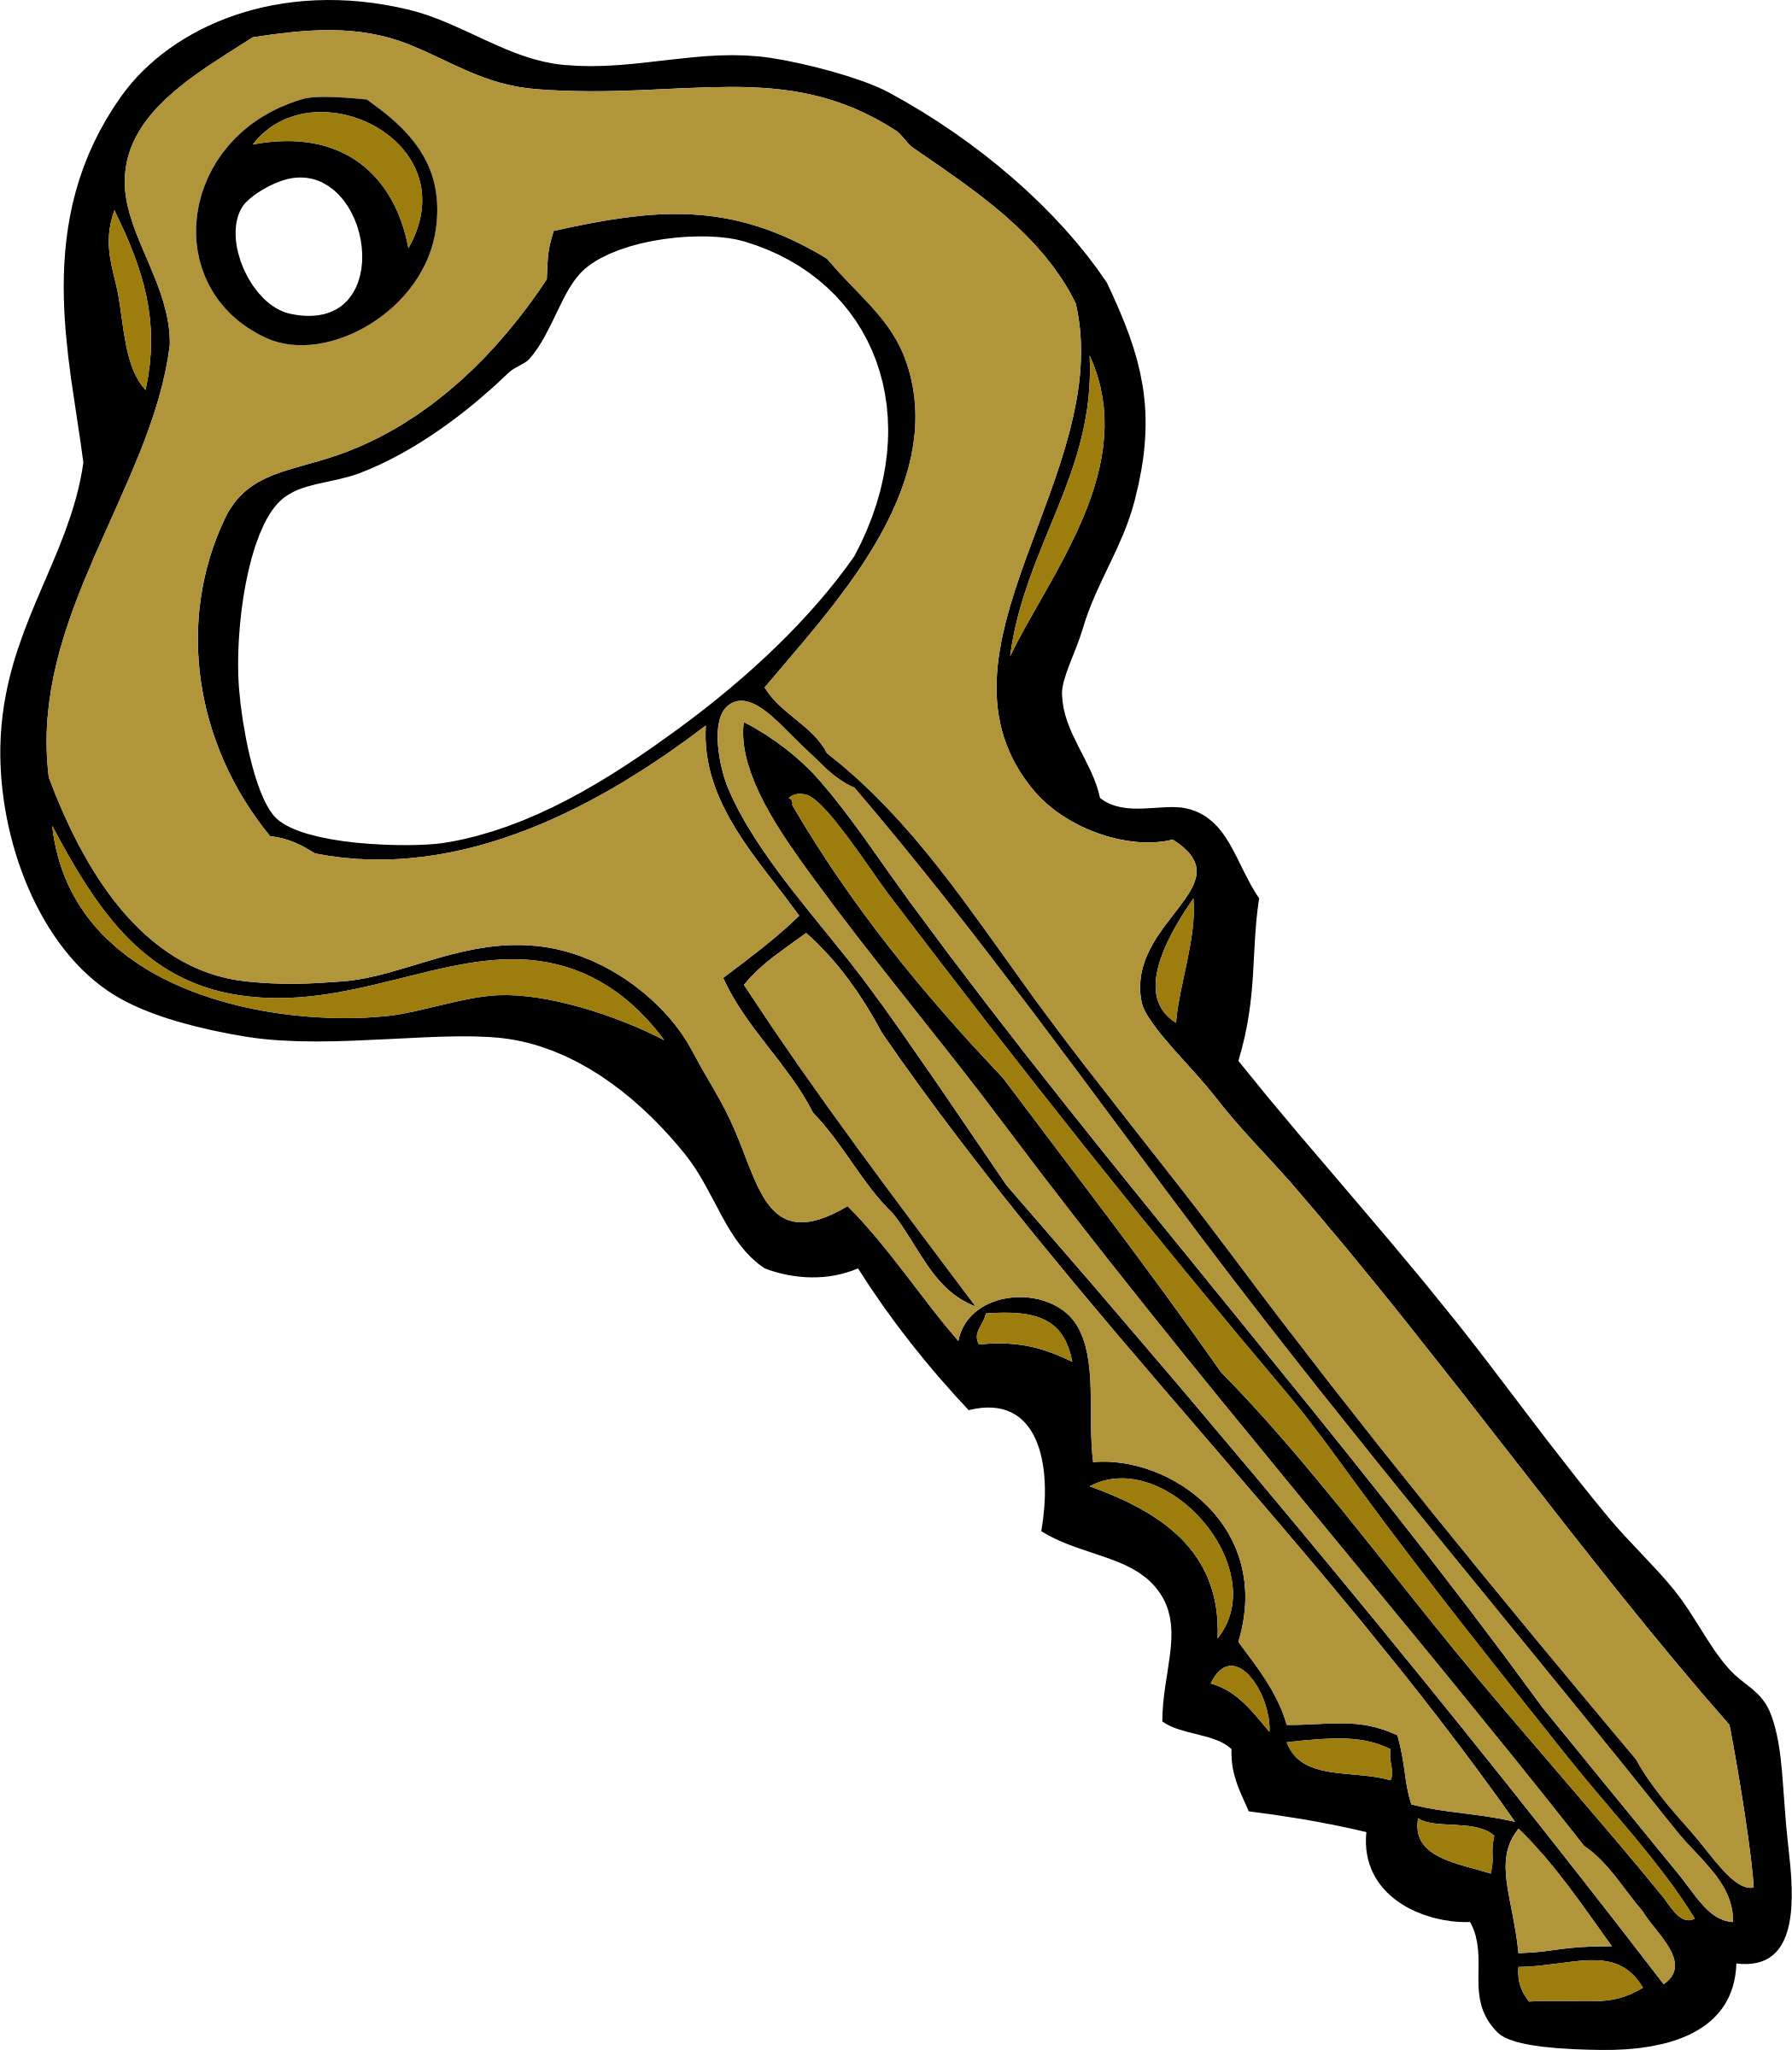 keys clipart crossed key